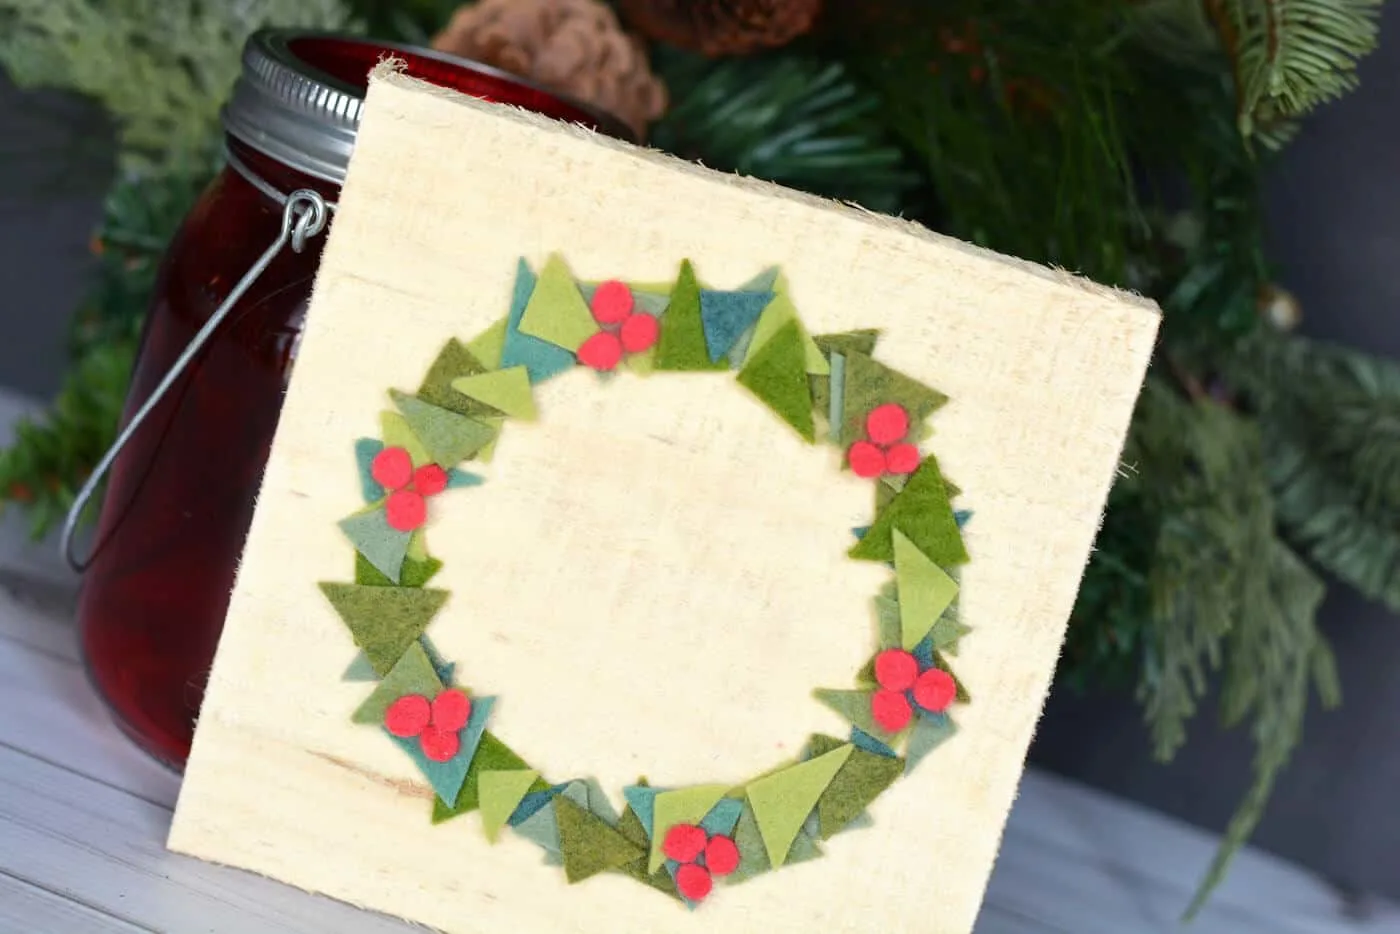 DIY felt Christmas wreath craft